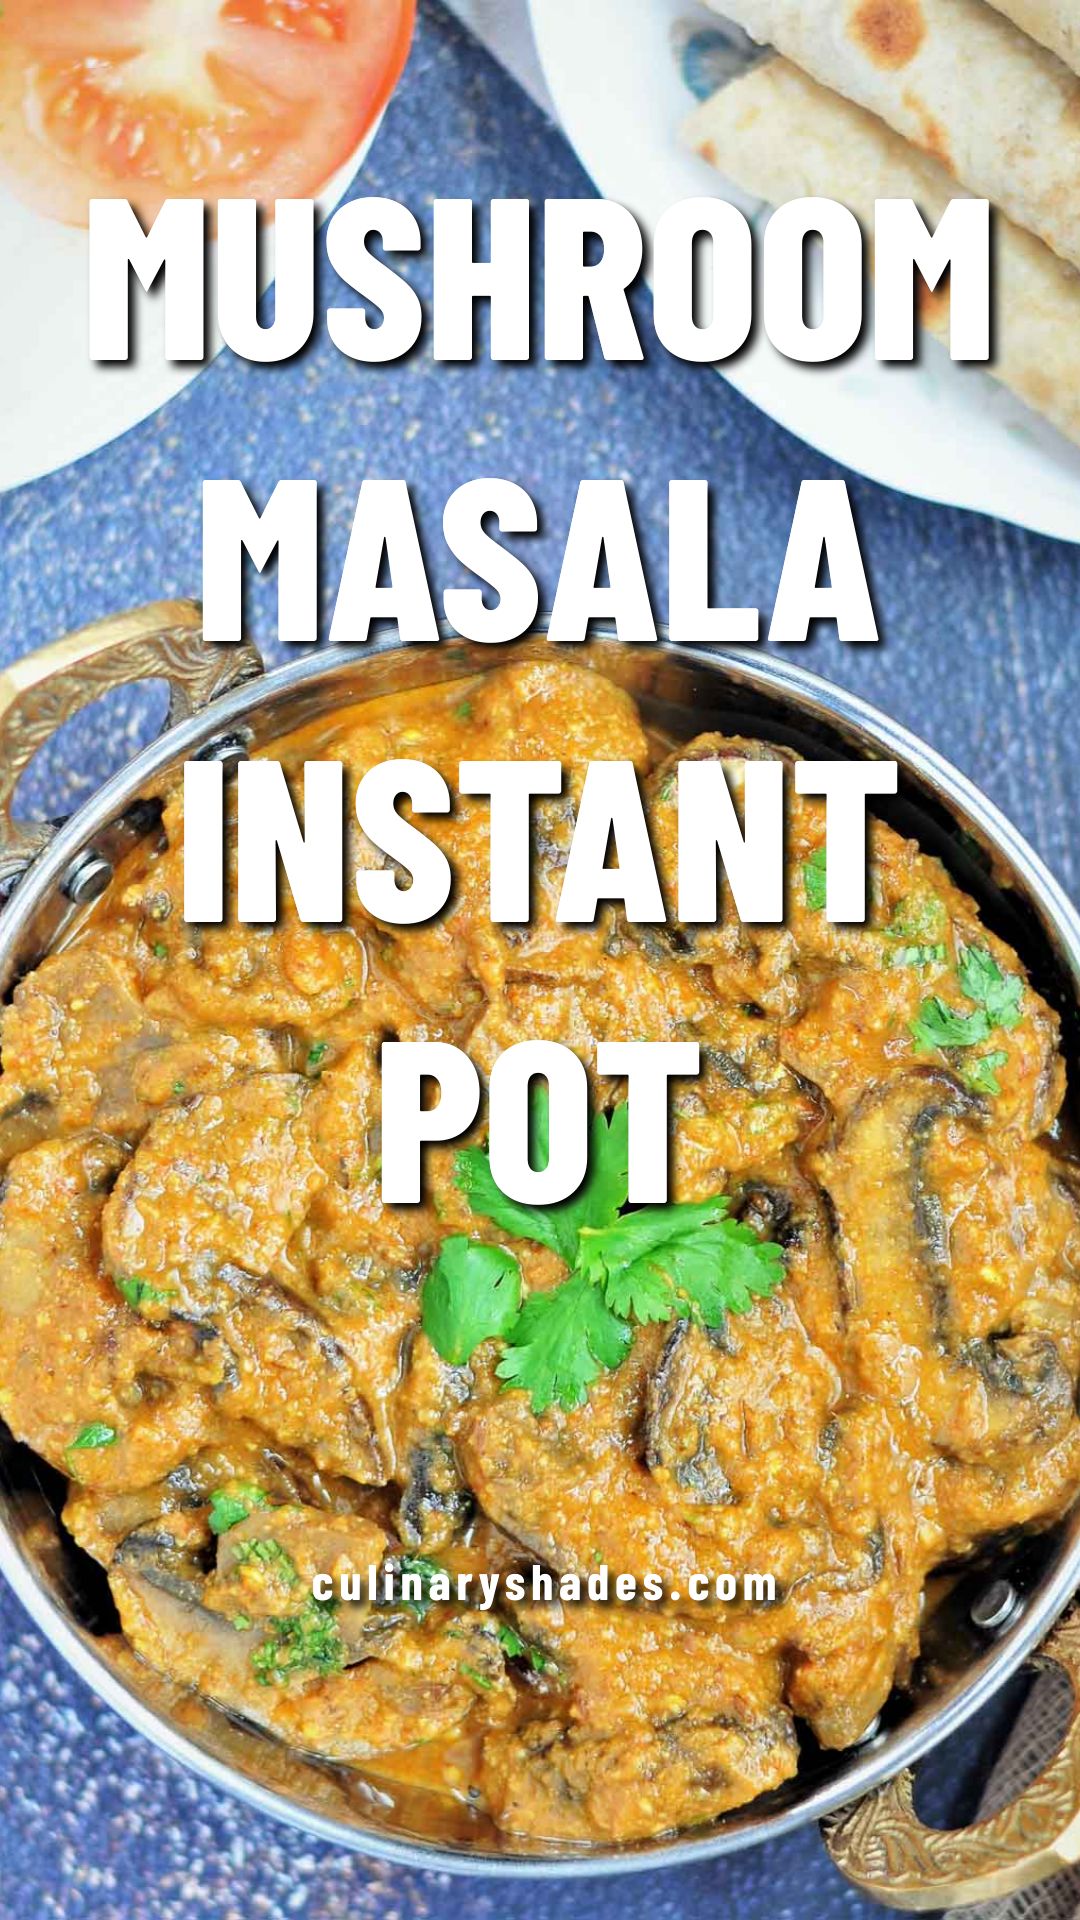 Mushroom masala curry 05.